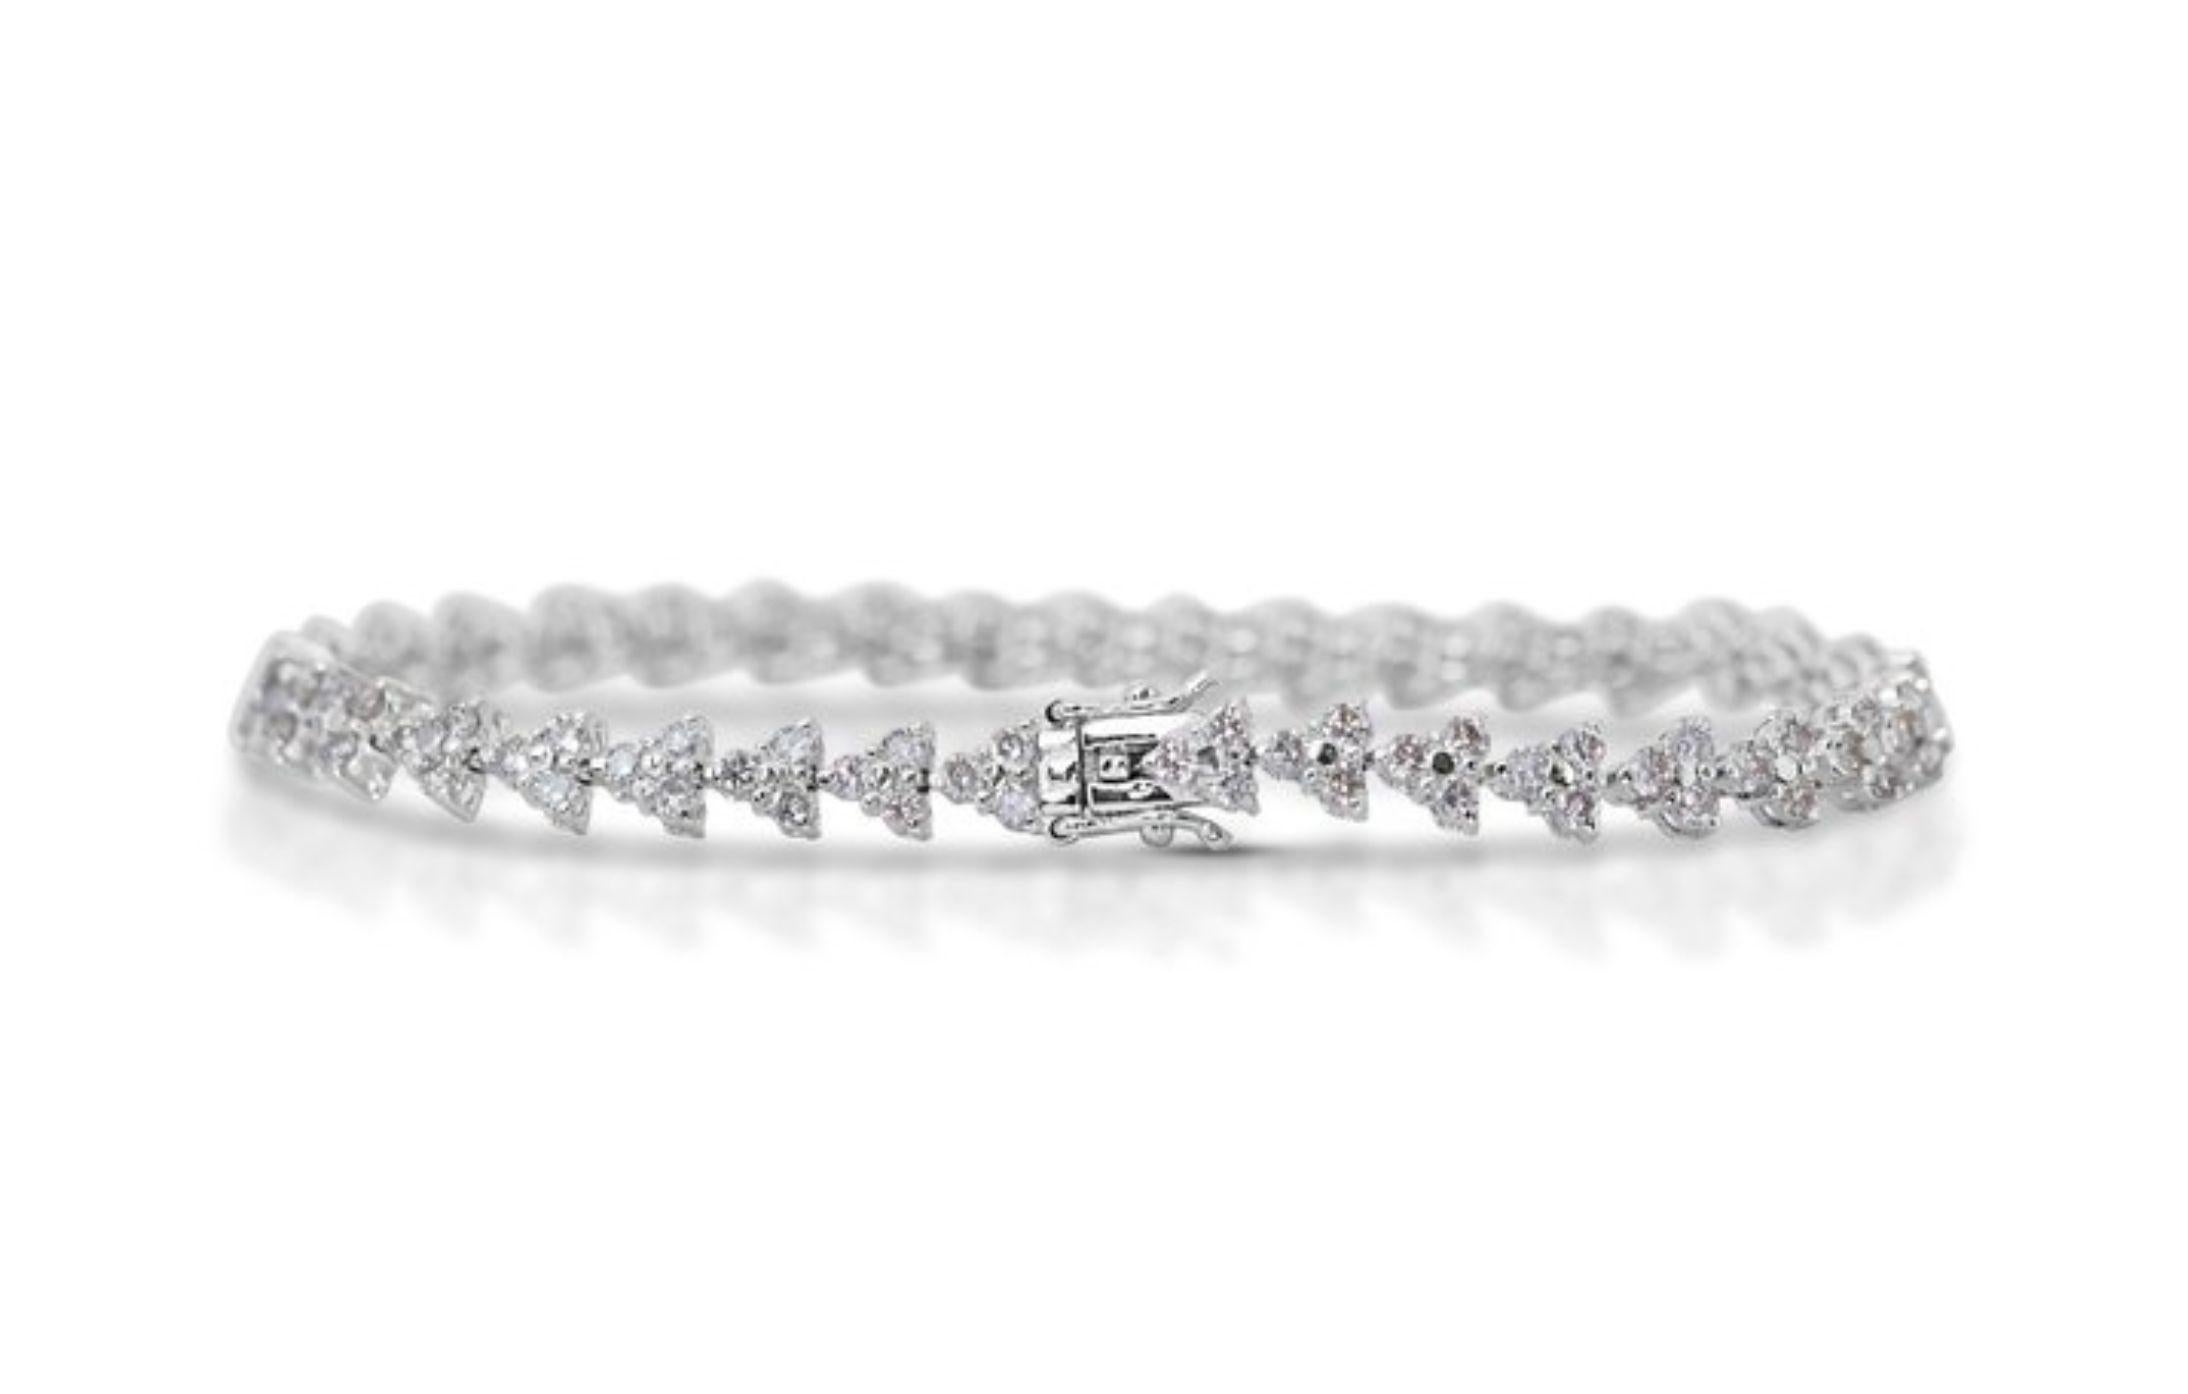 Exquisite 3.75ct Round Diamond Bracelet set in 14K White Gold In New Condition For Sale In רמת גן, IL